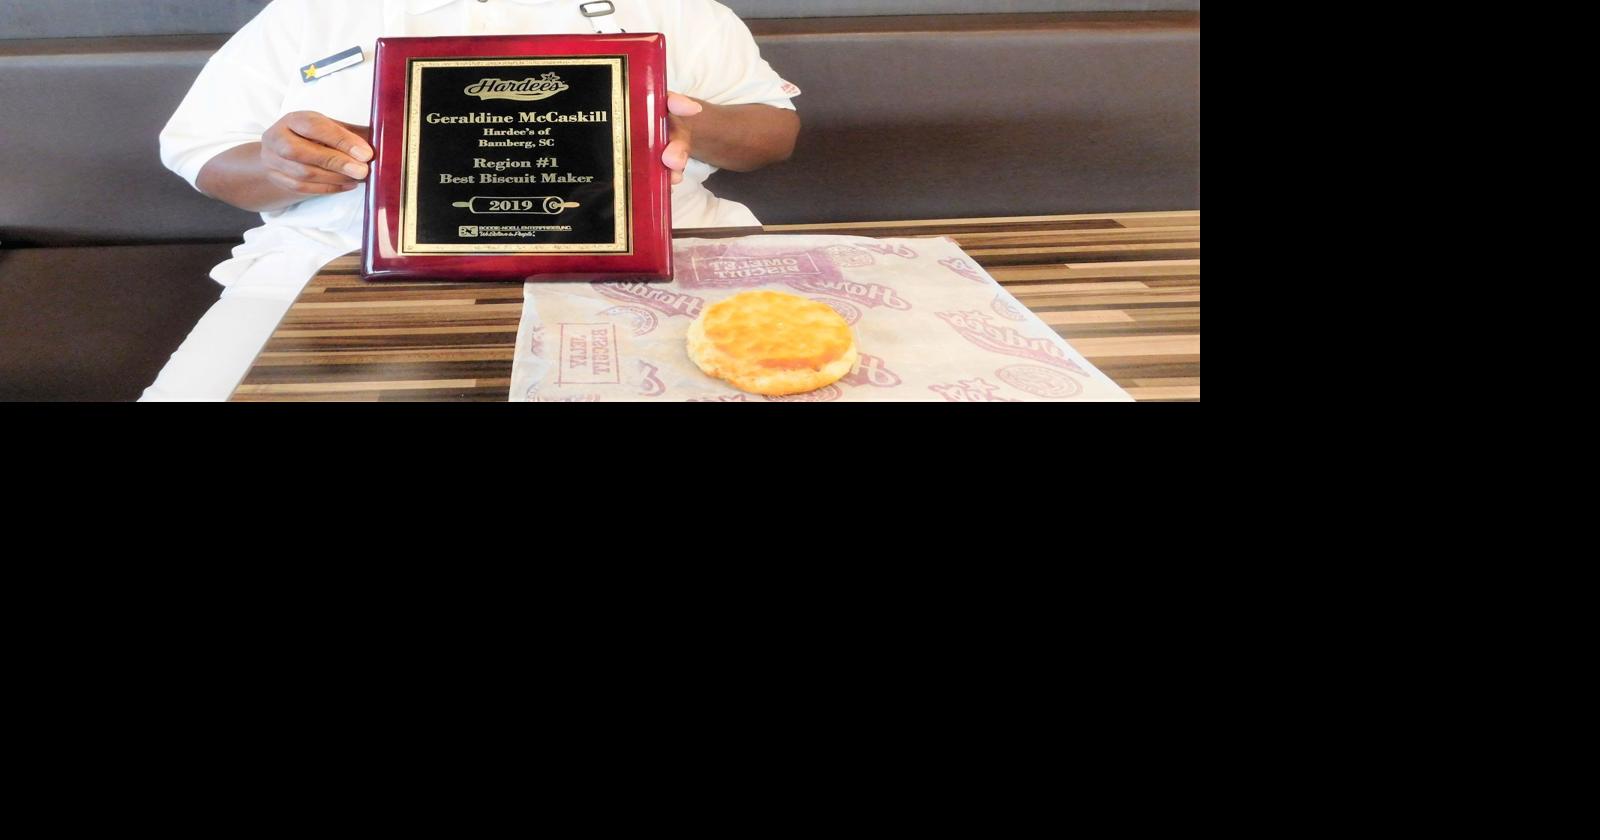 Biscuit Maker at Hardee's in Floyd, VA. Wins Top Award in Biscuit